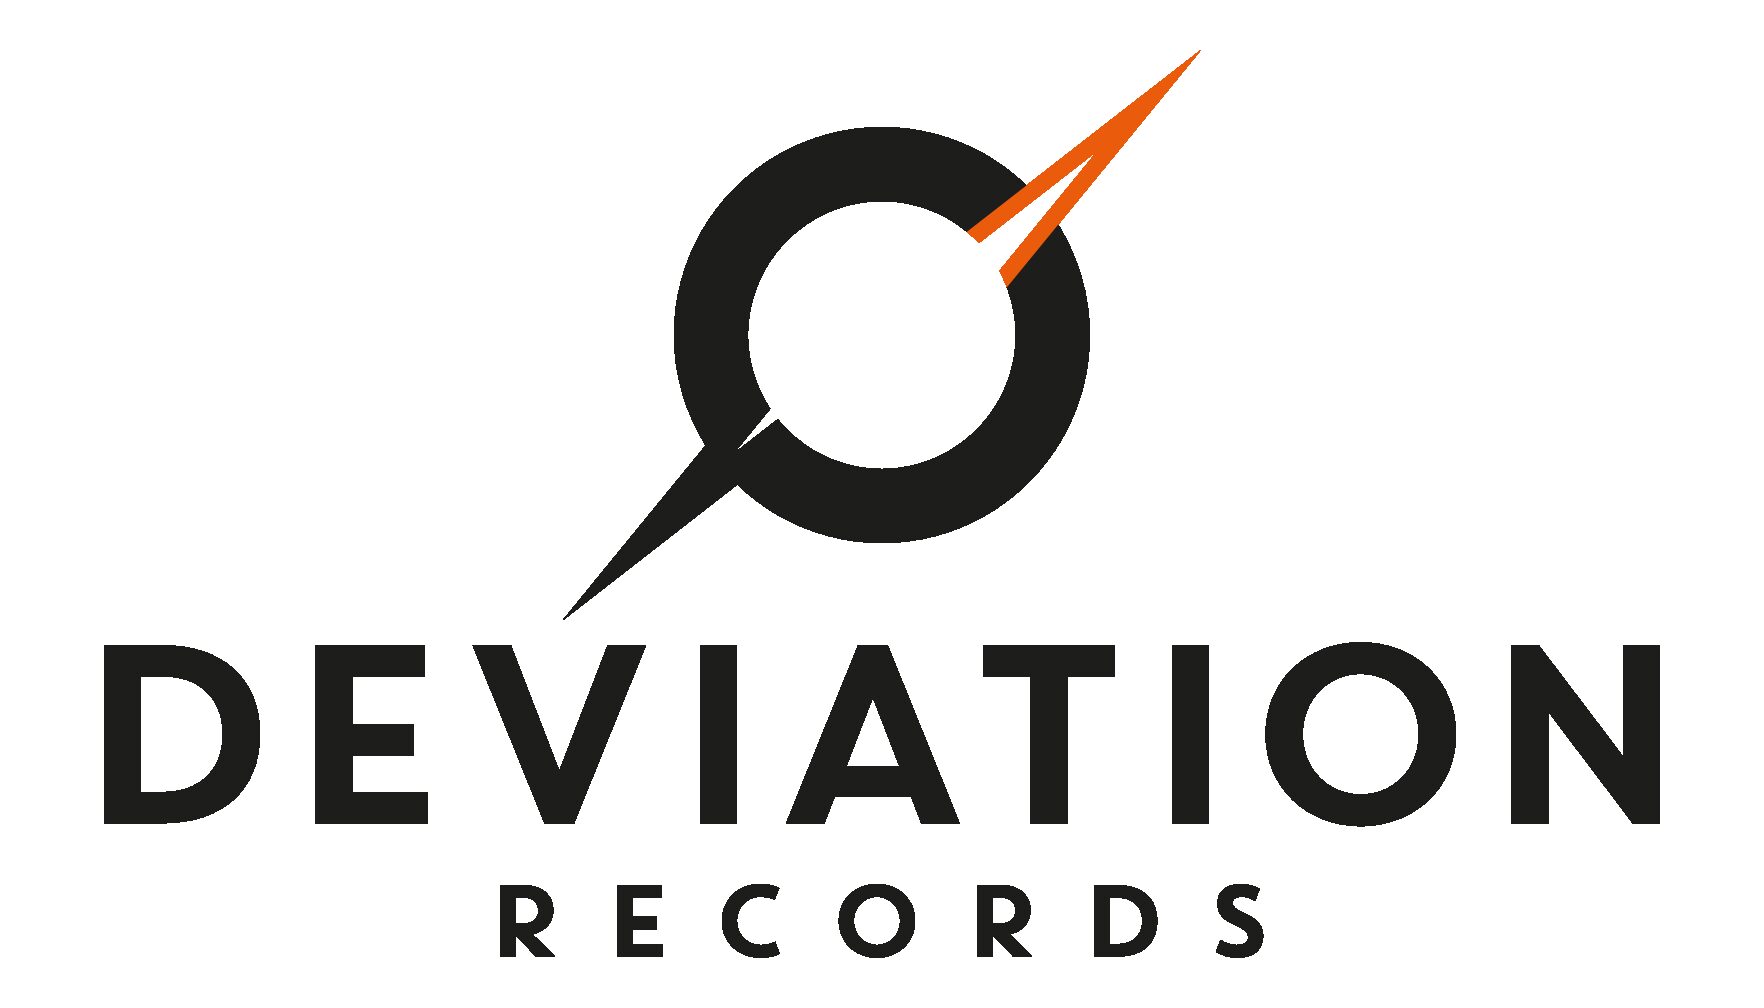 Deviation Records